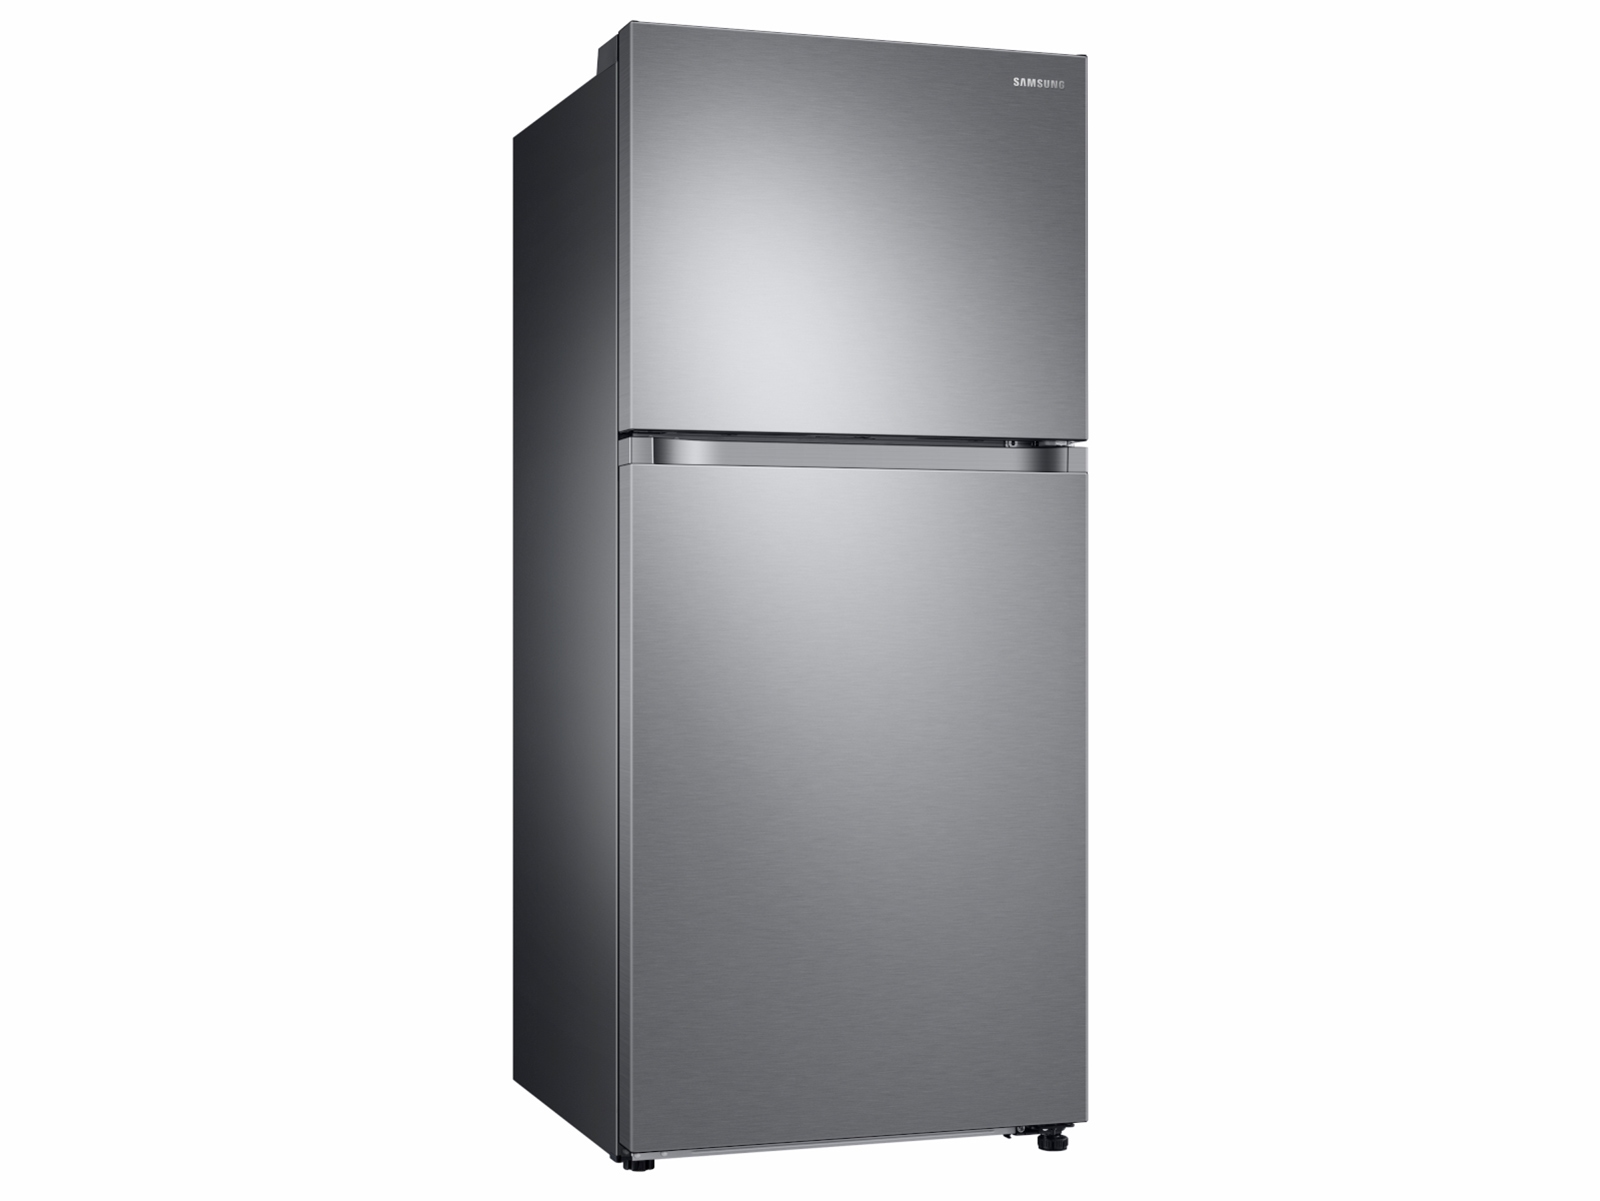 https://image-us.samsung.com/SamsungUS/home/home-appliances/refrigerators/top-mount/rt21m6213sr/refresh/10_Refrigerator_Top_Freezer_RT18M6213SR_L-Perspective_Closed_Silver_103018.jpg?$product-details-jpg$